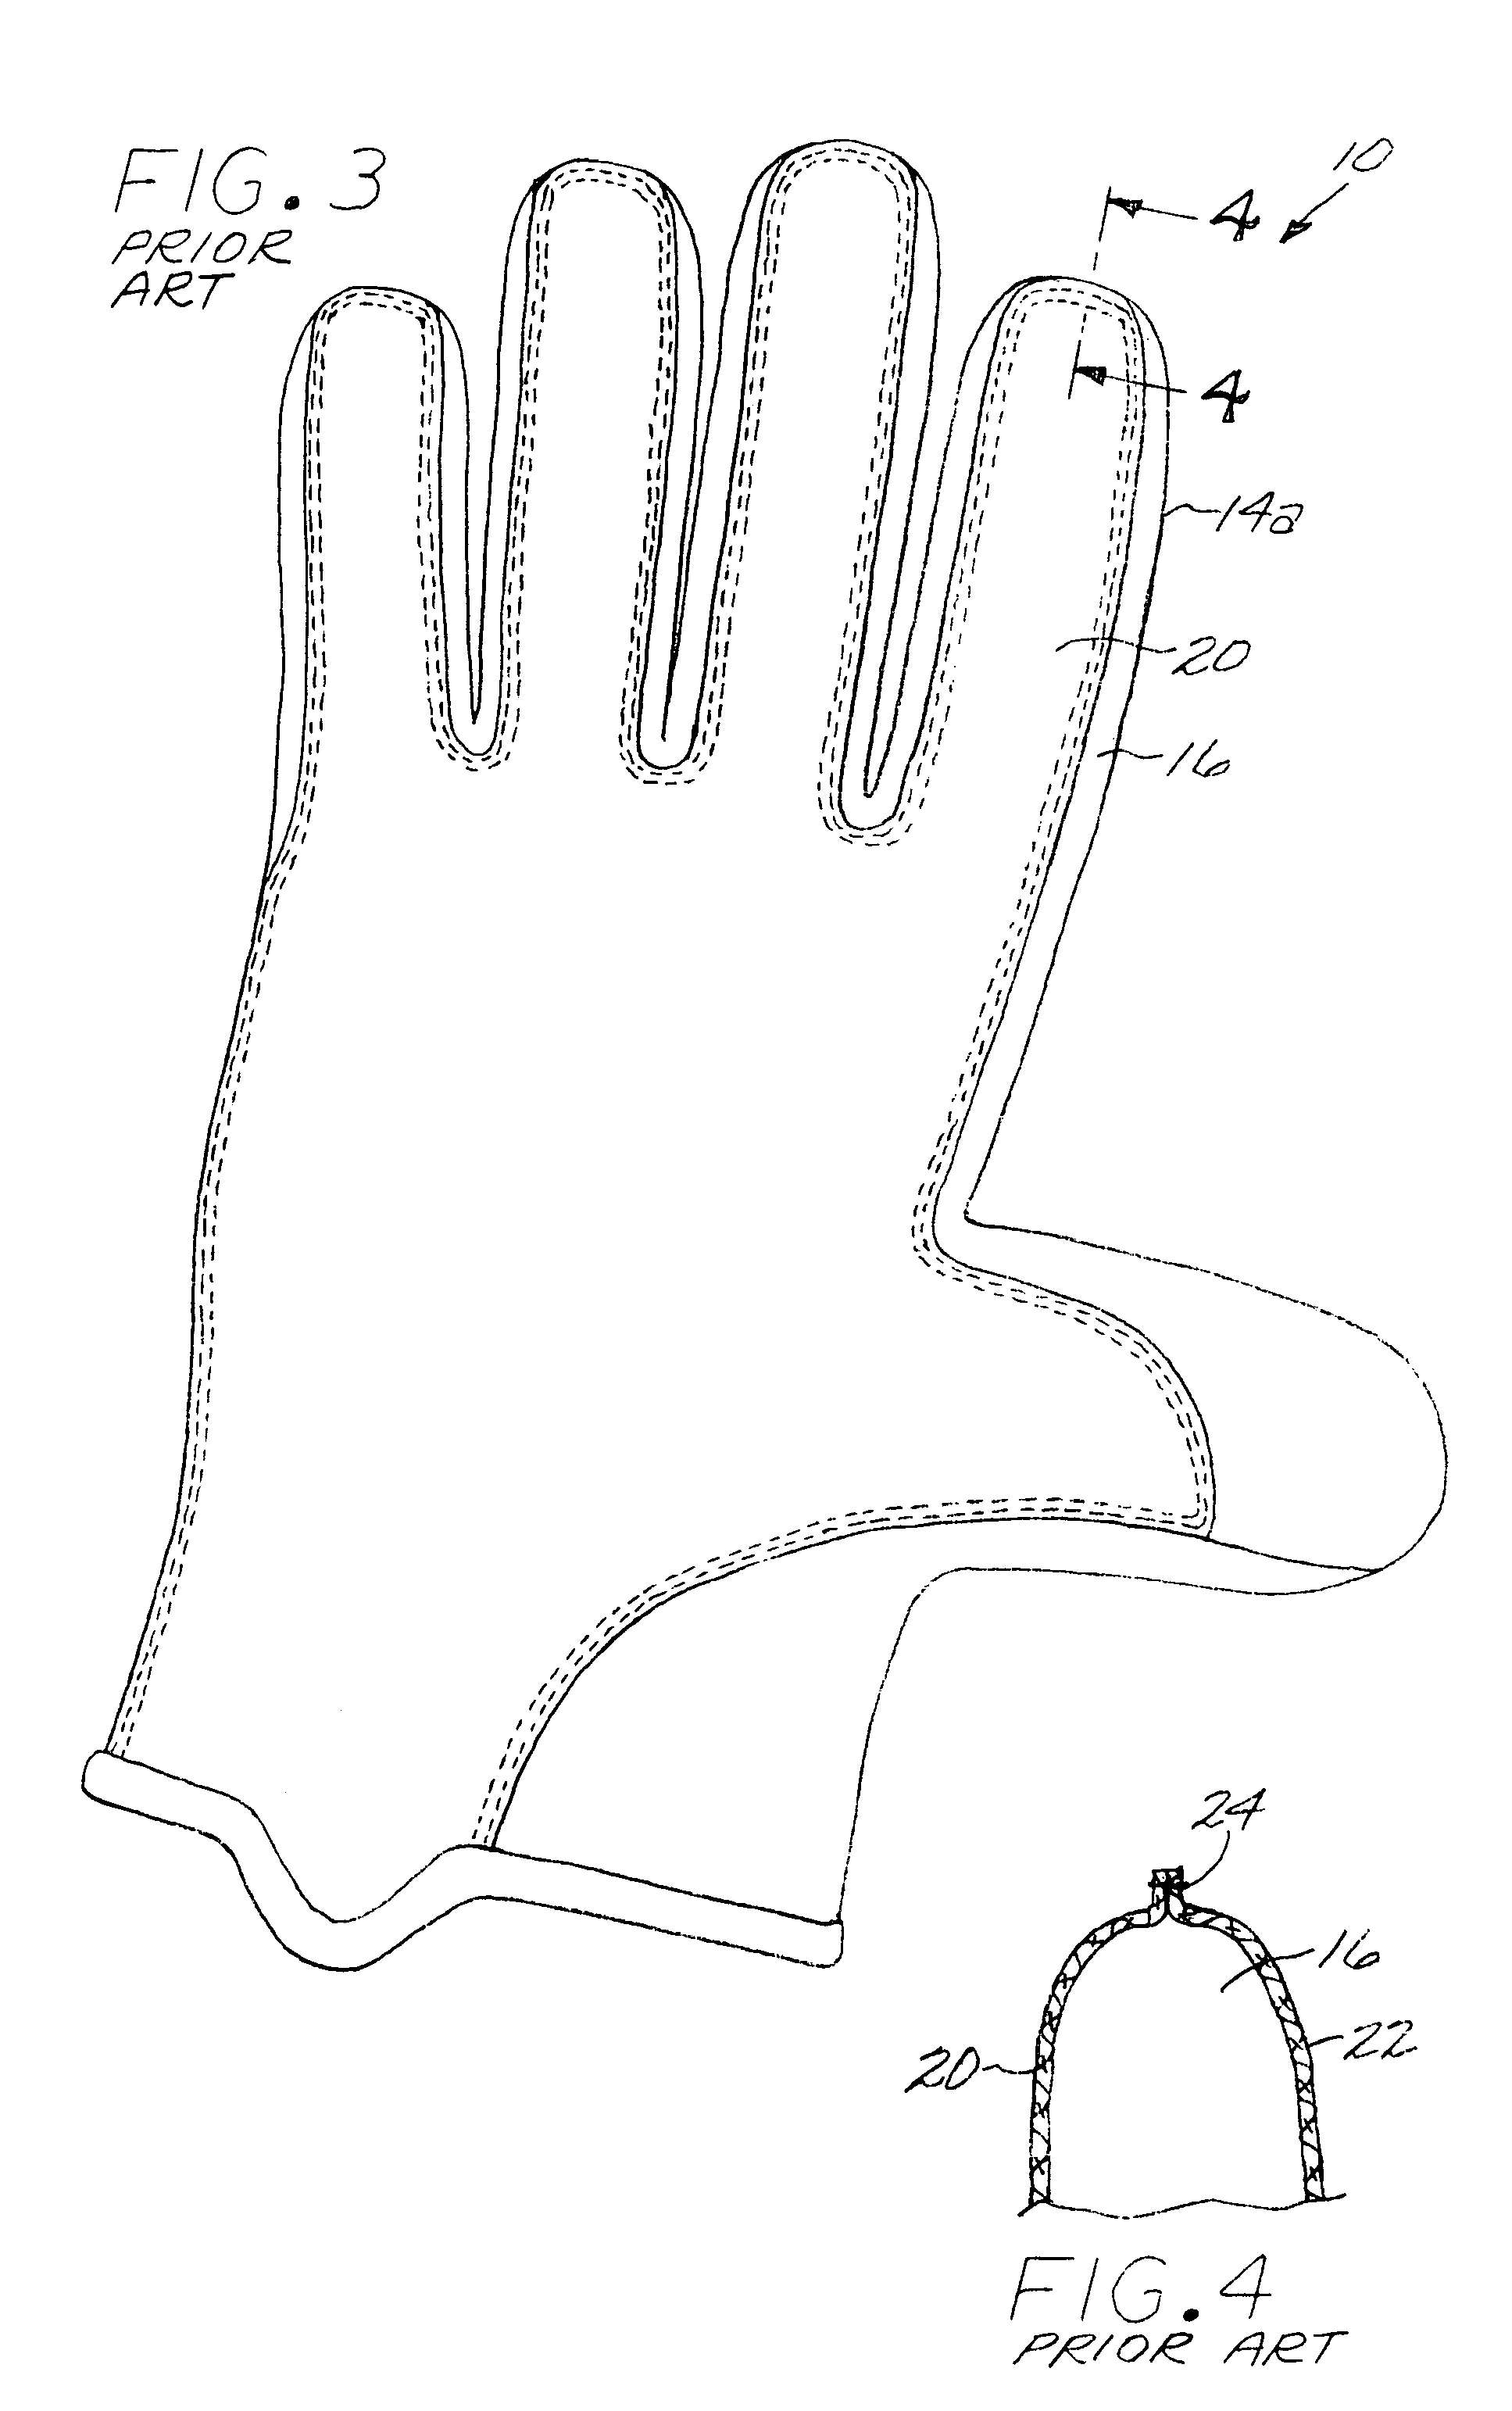 Glove construction wherein palm material rolls over fingertip